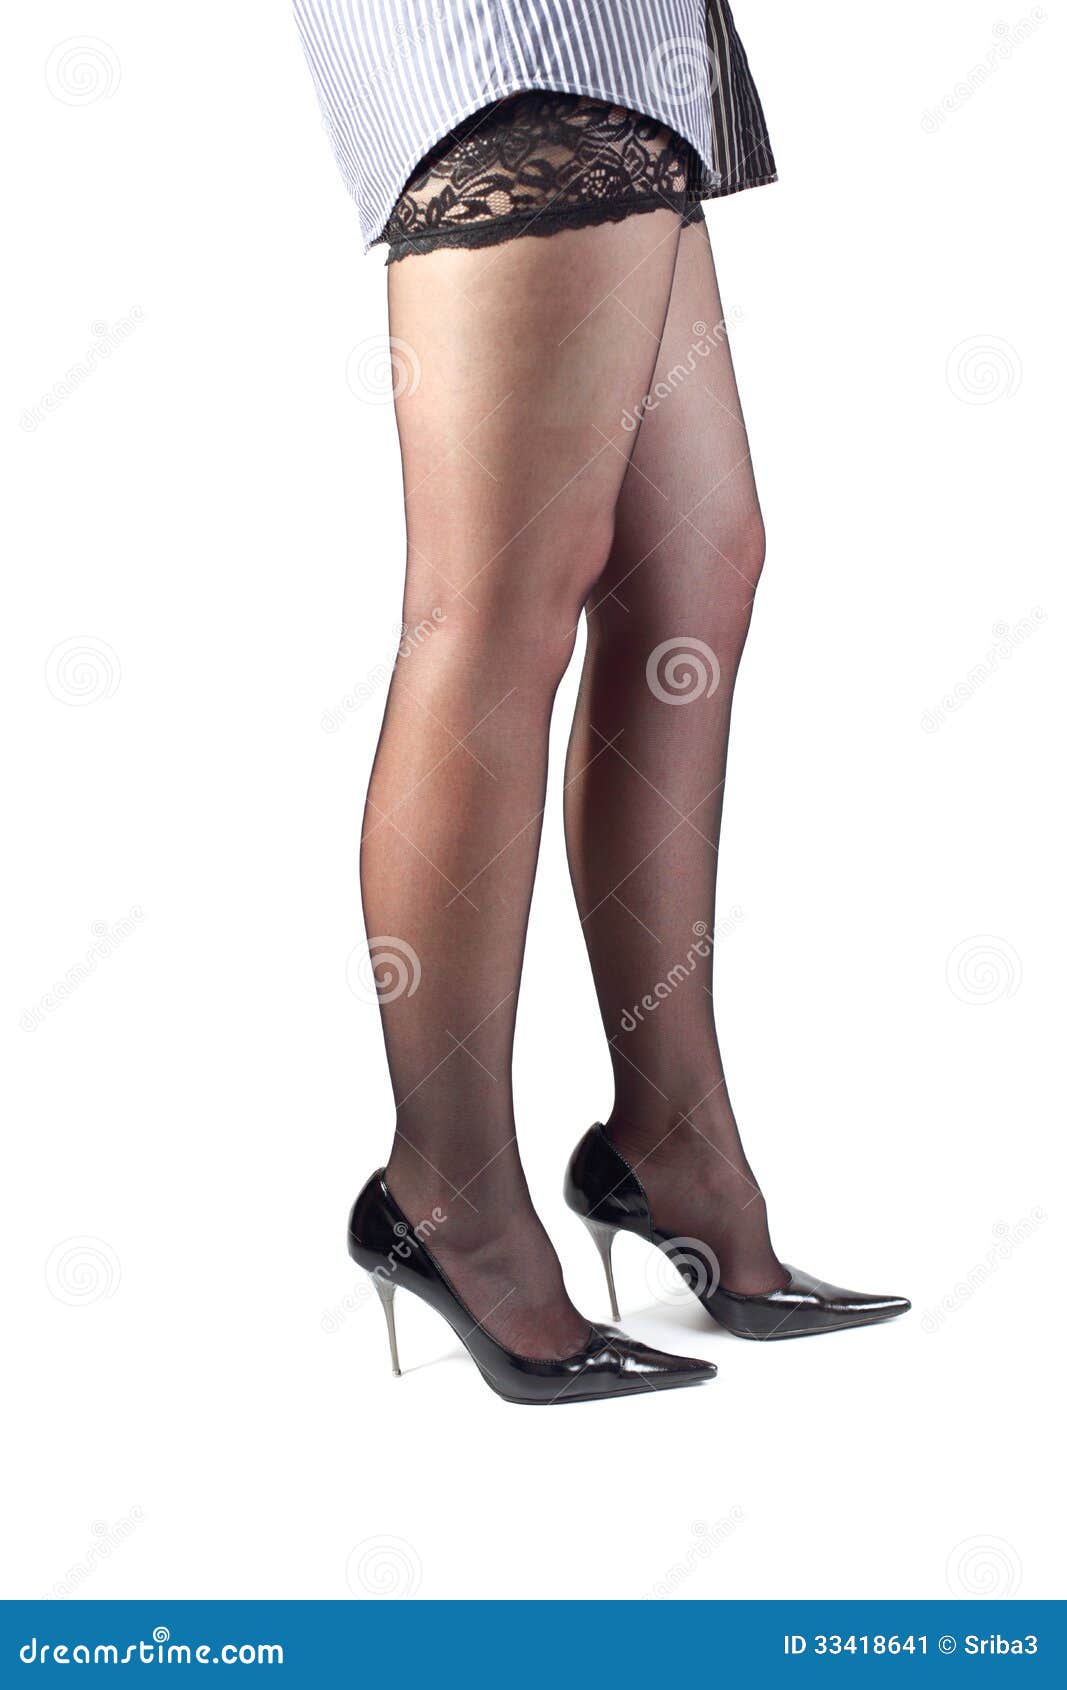 6,607 Beautiful Legs White Stockings Stock Photos - Free & Royalty